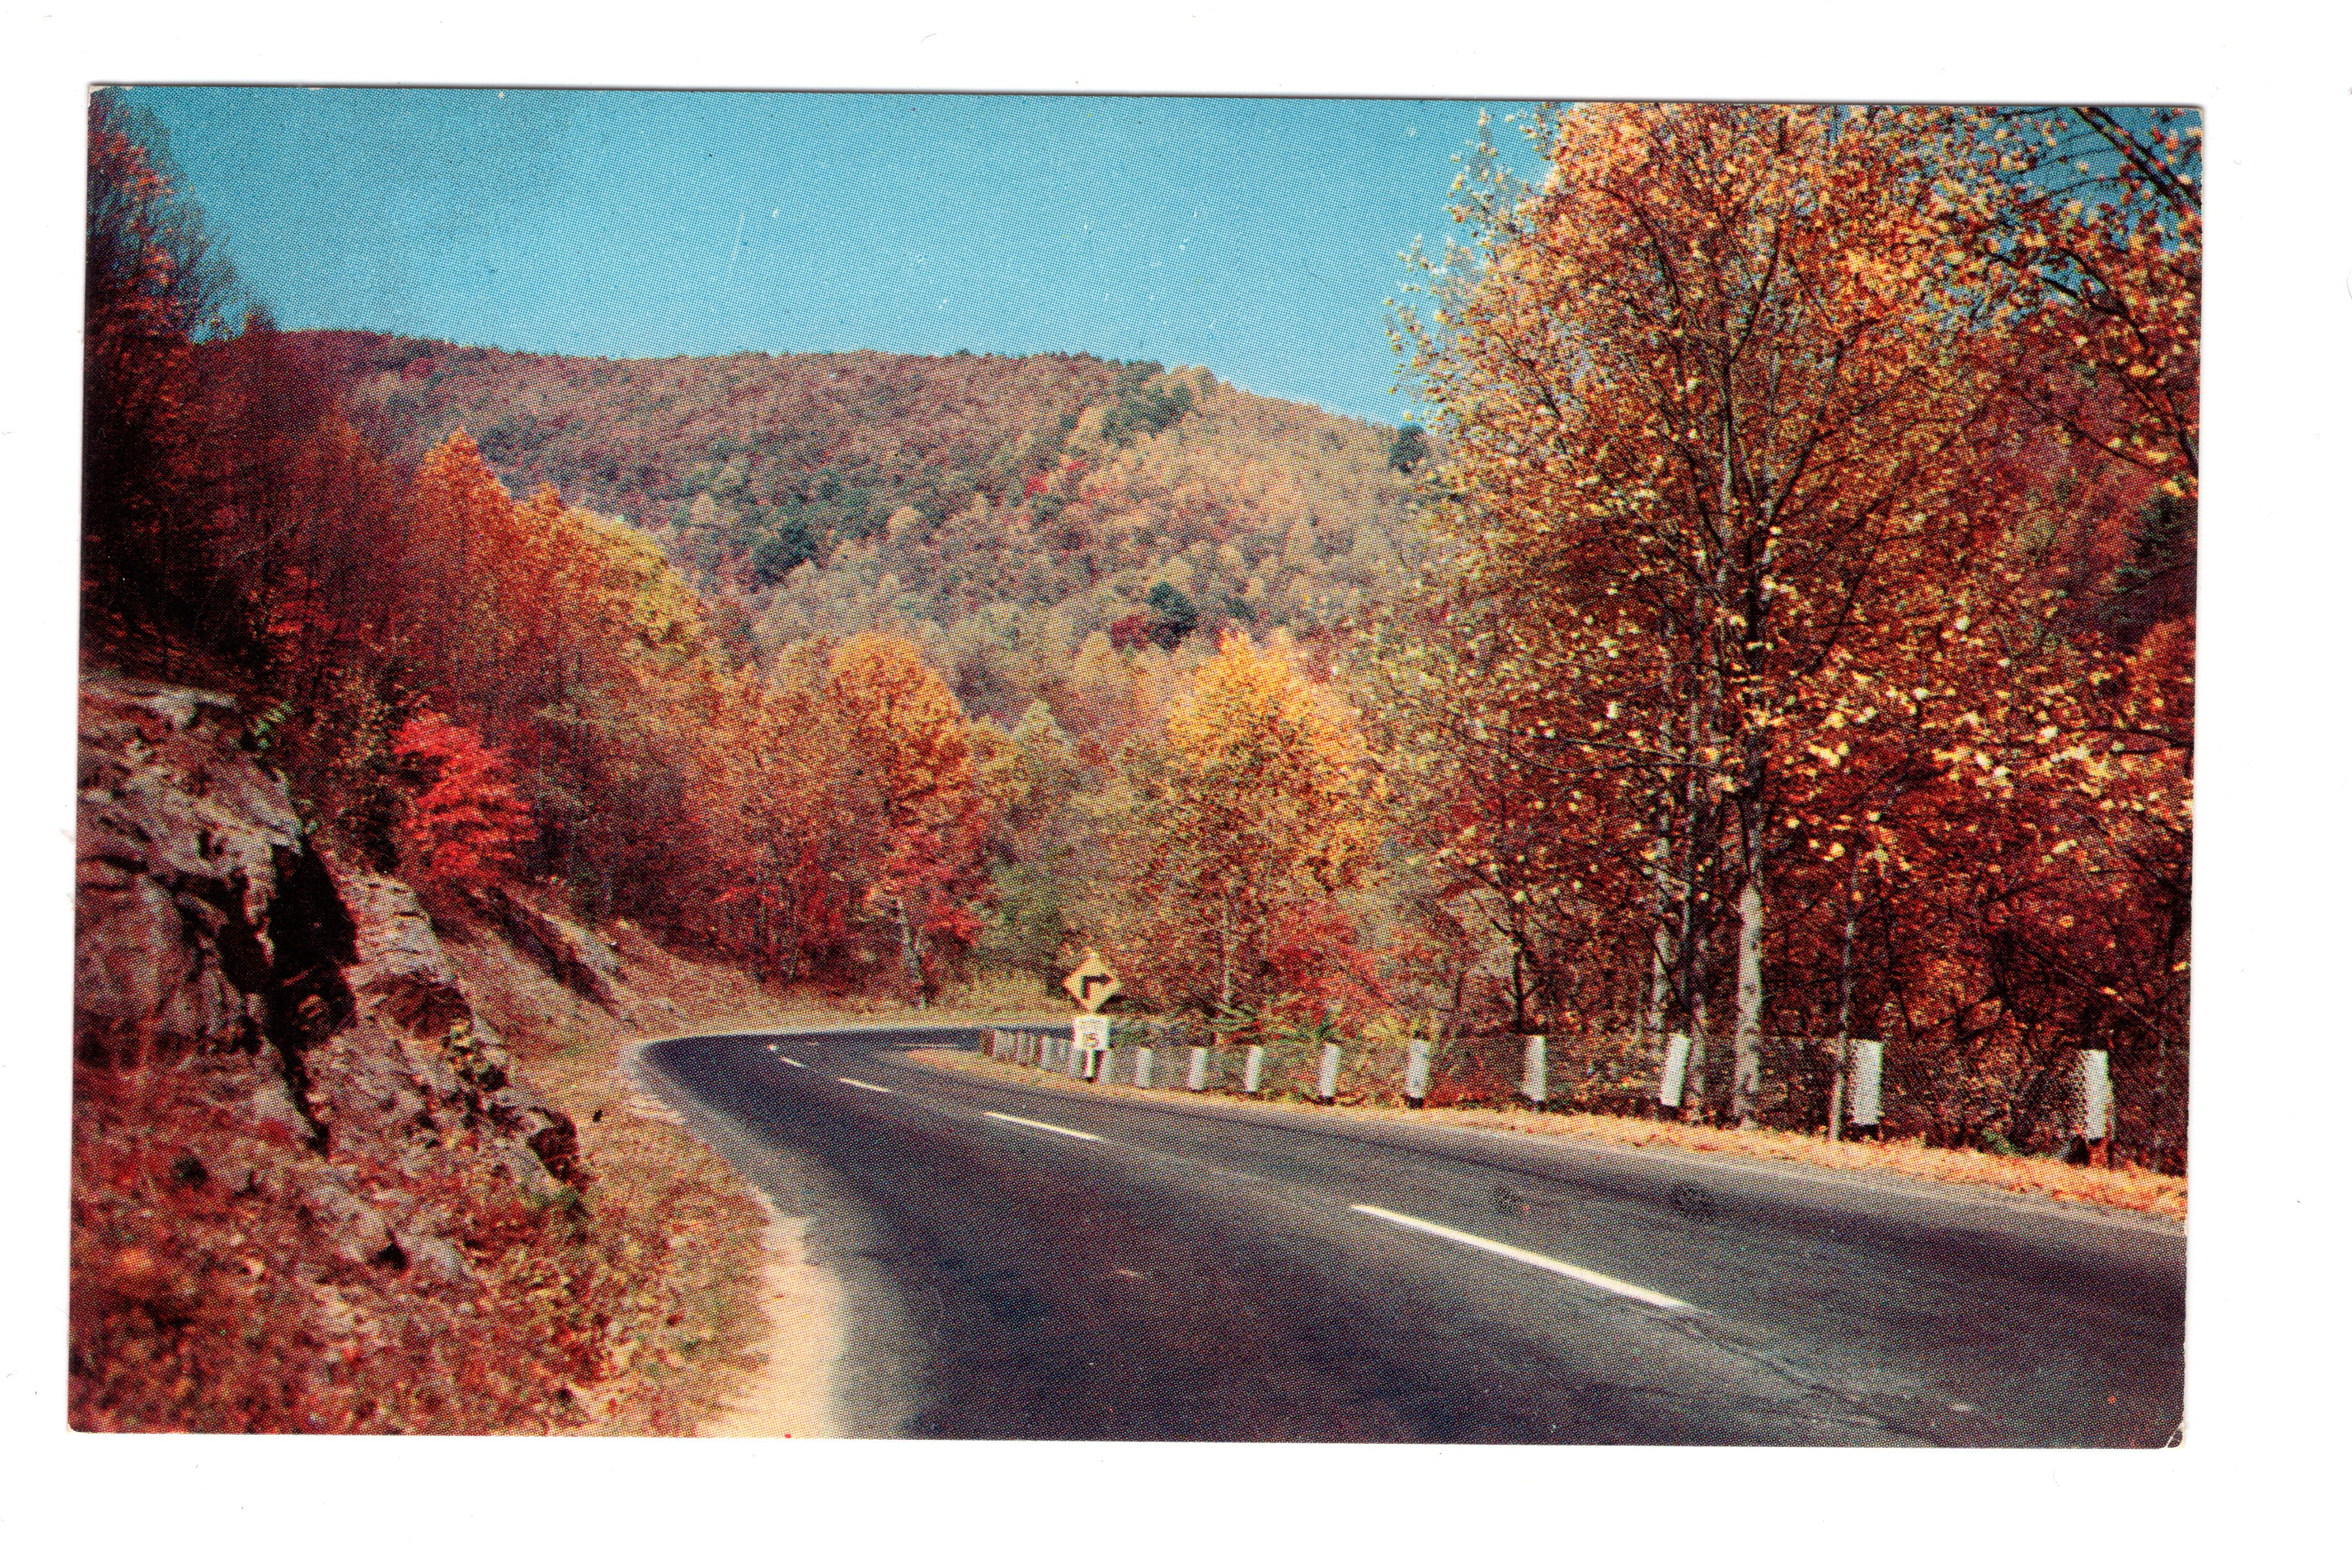 Approaching Skyline Drive on US HWY 211, Sperryville Virginia, Vintage Post Card.